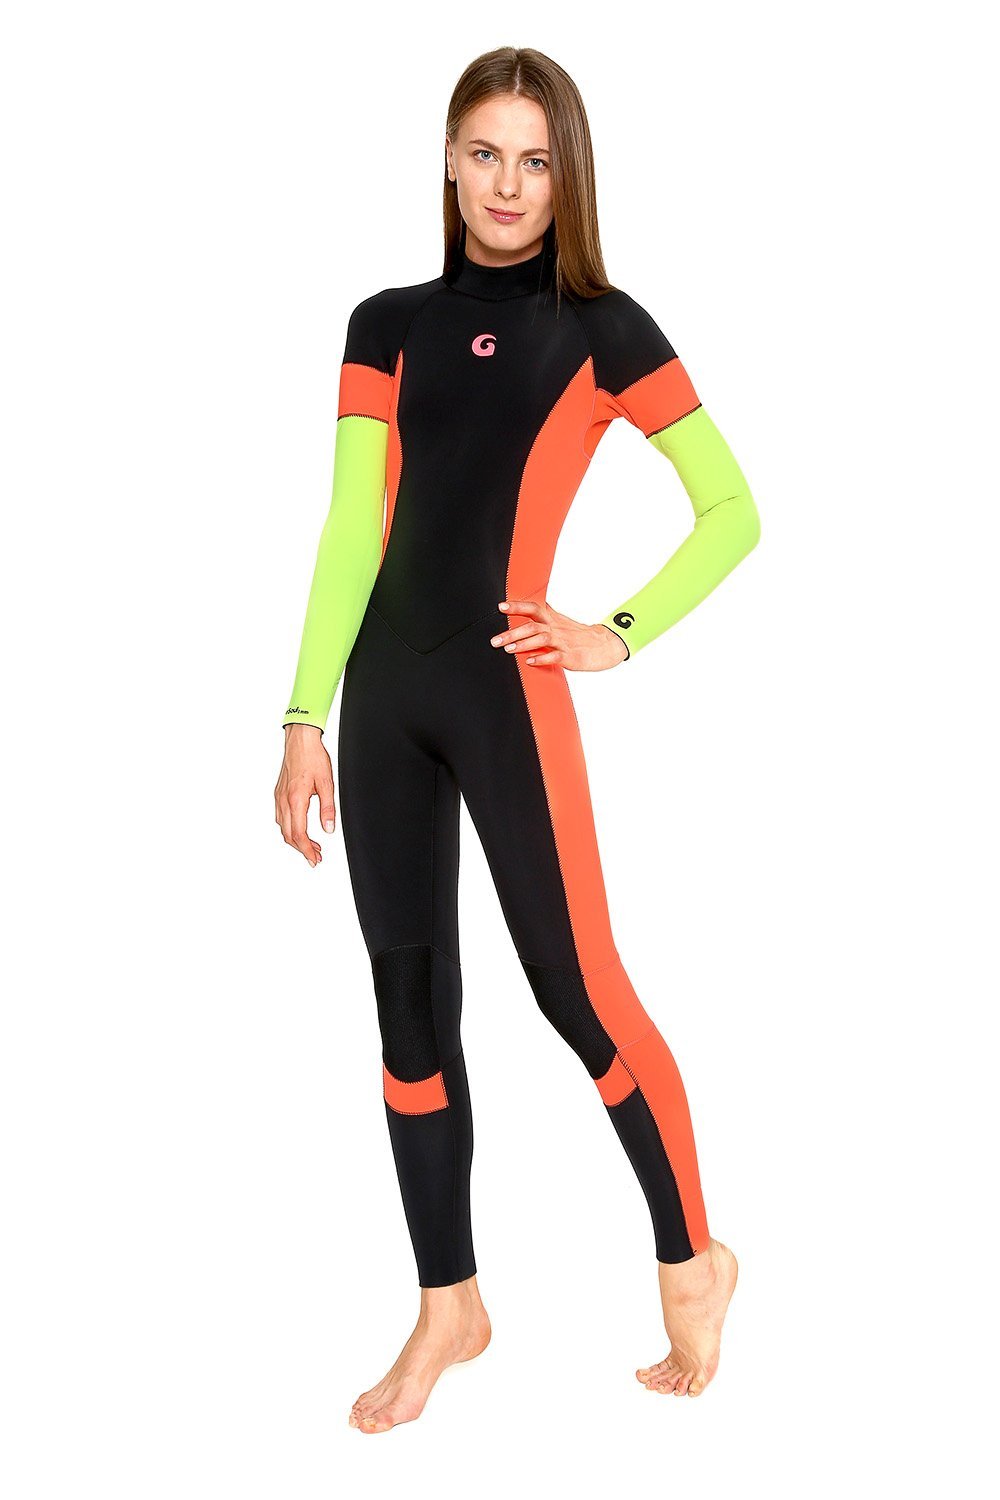 GlideSoul full suit 3/2 MM women bold wetsuit